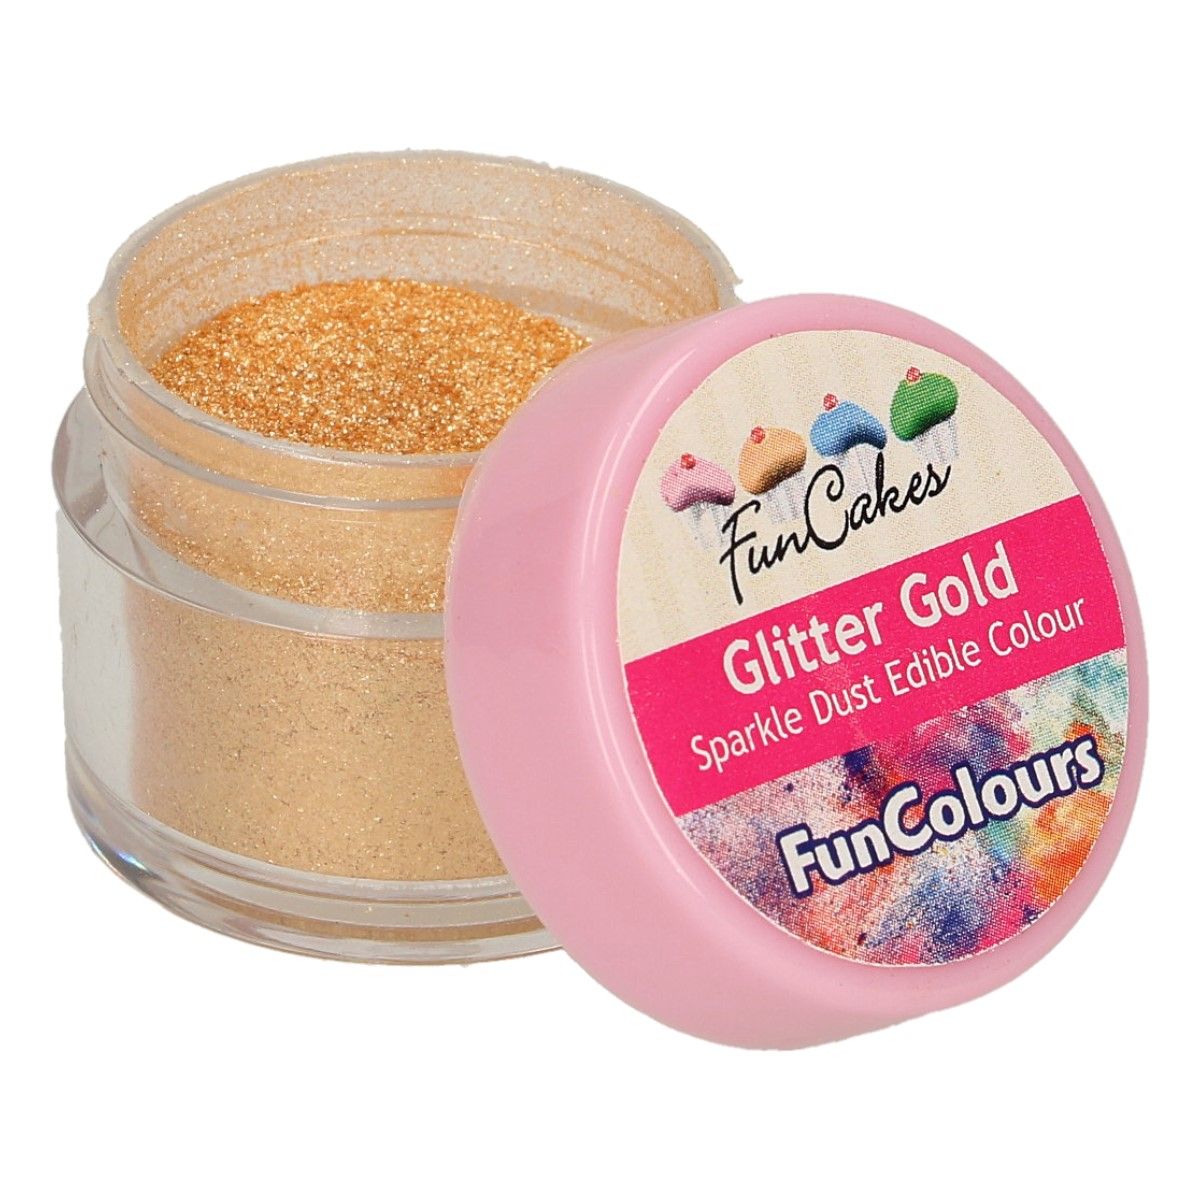 FUNCAKES EDIBLE FUNCOLOURS SPARKLE DUST - GLITTER GOLD, Farbpulver Gold 3,5g